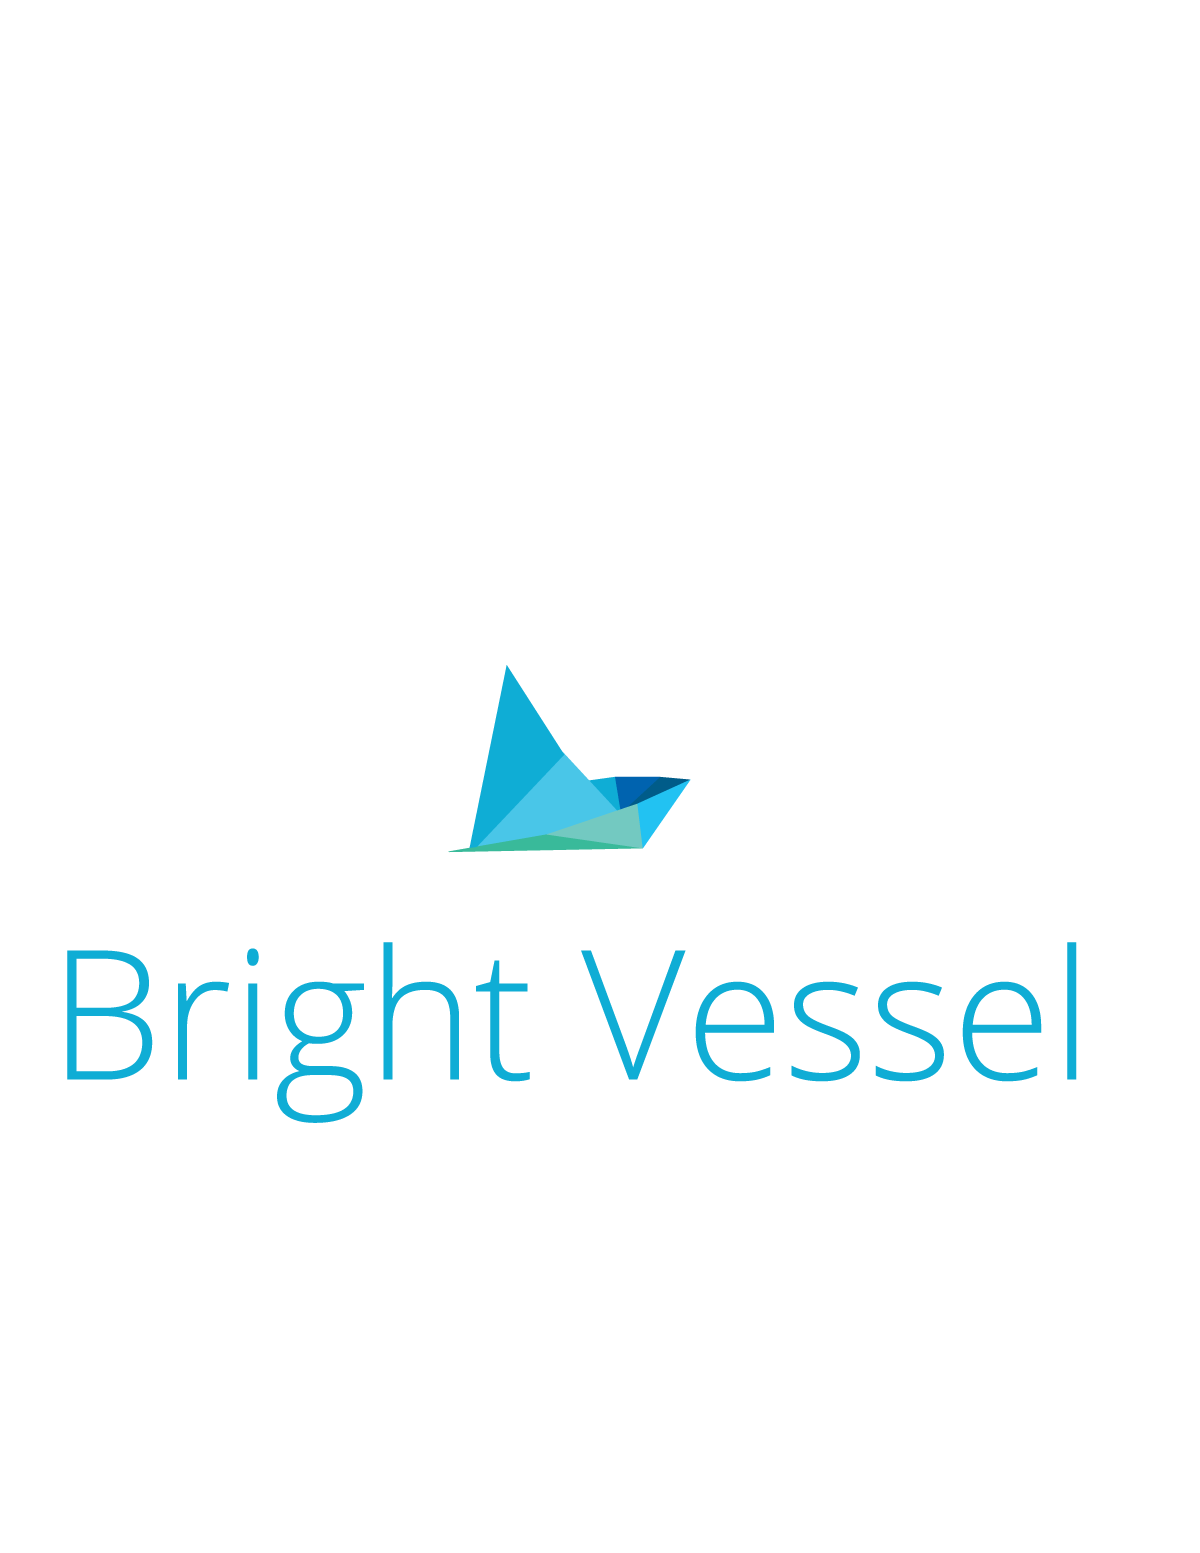 Bright Vessel Logo